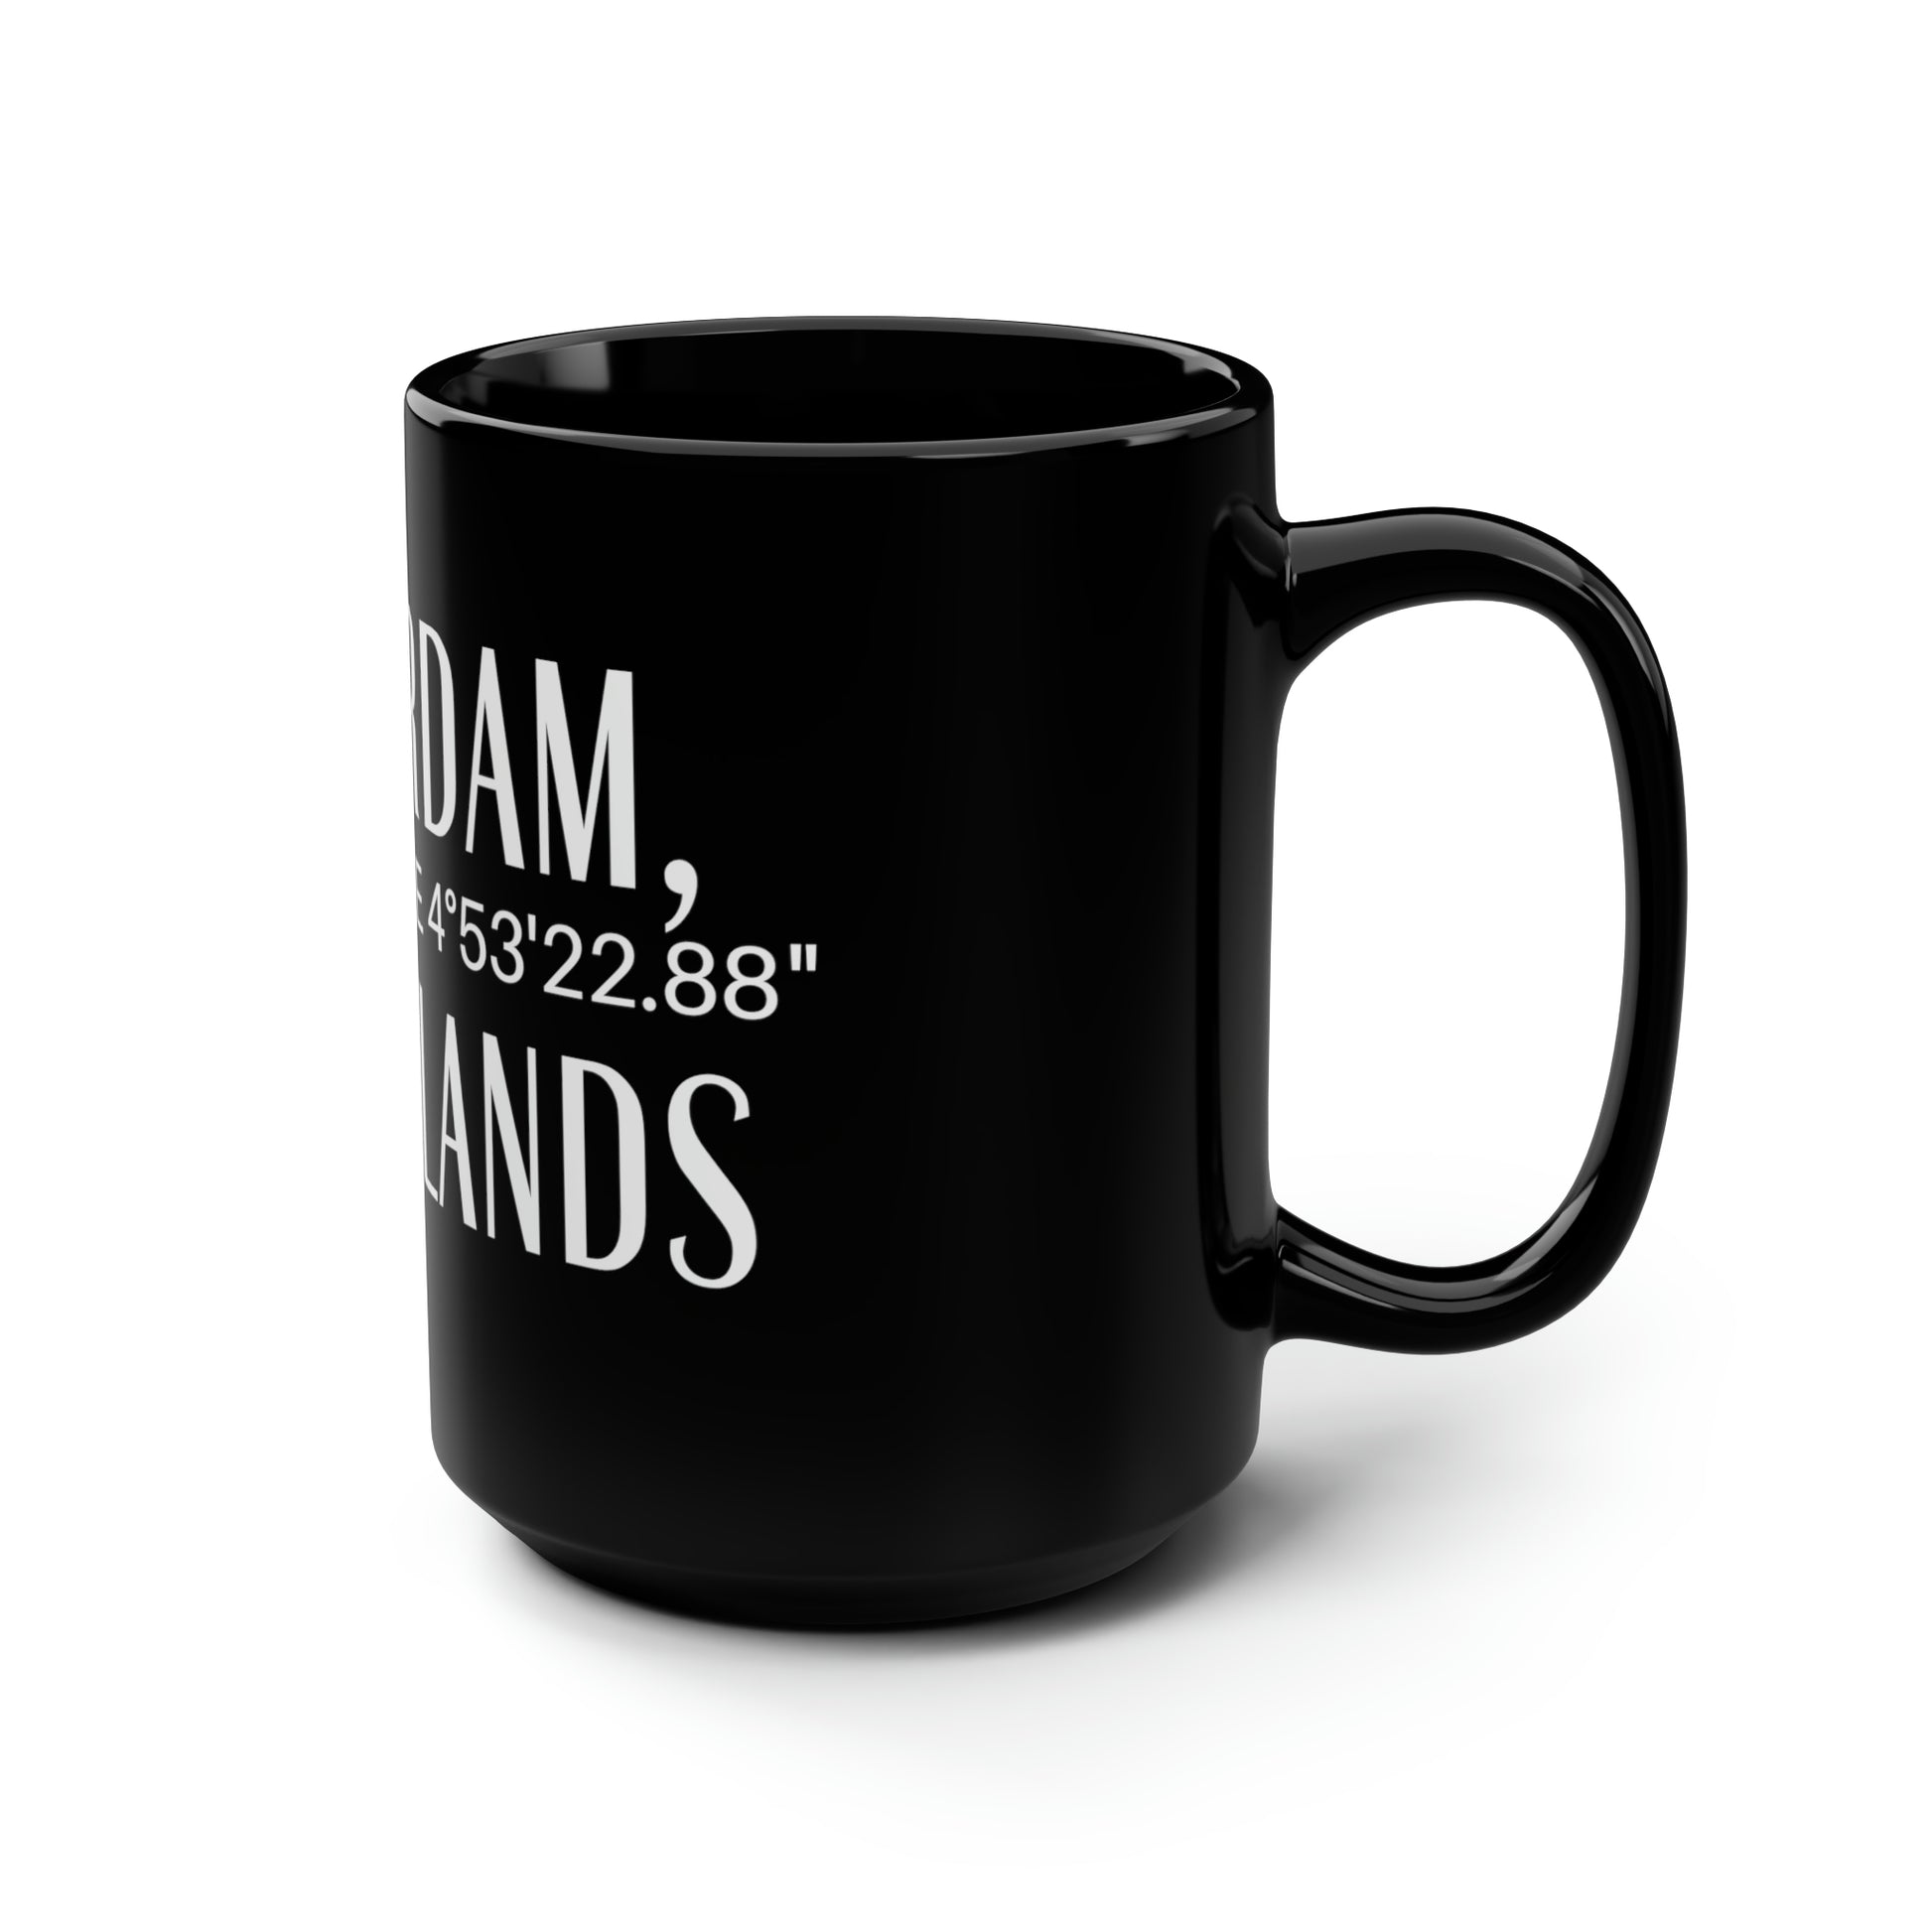 Netherlands Themed Mug